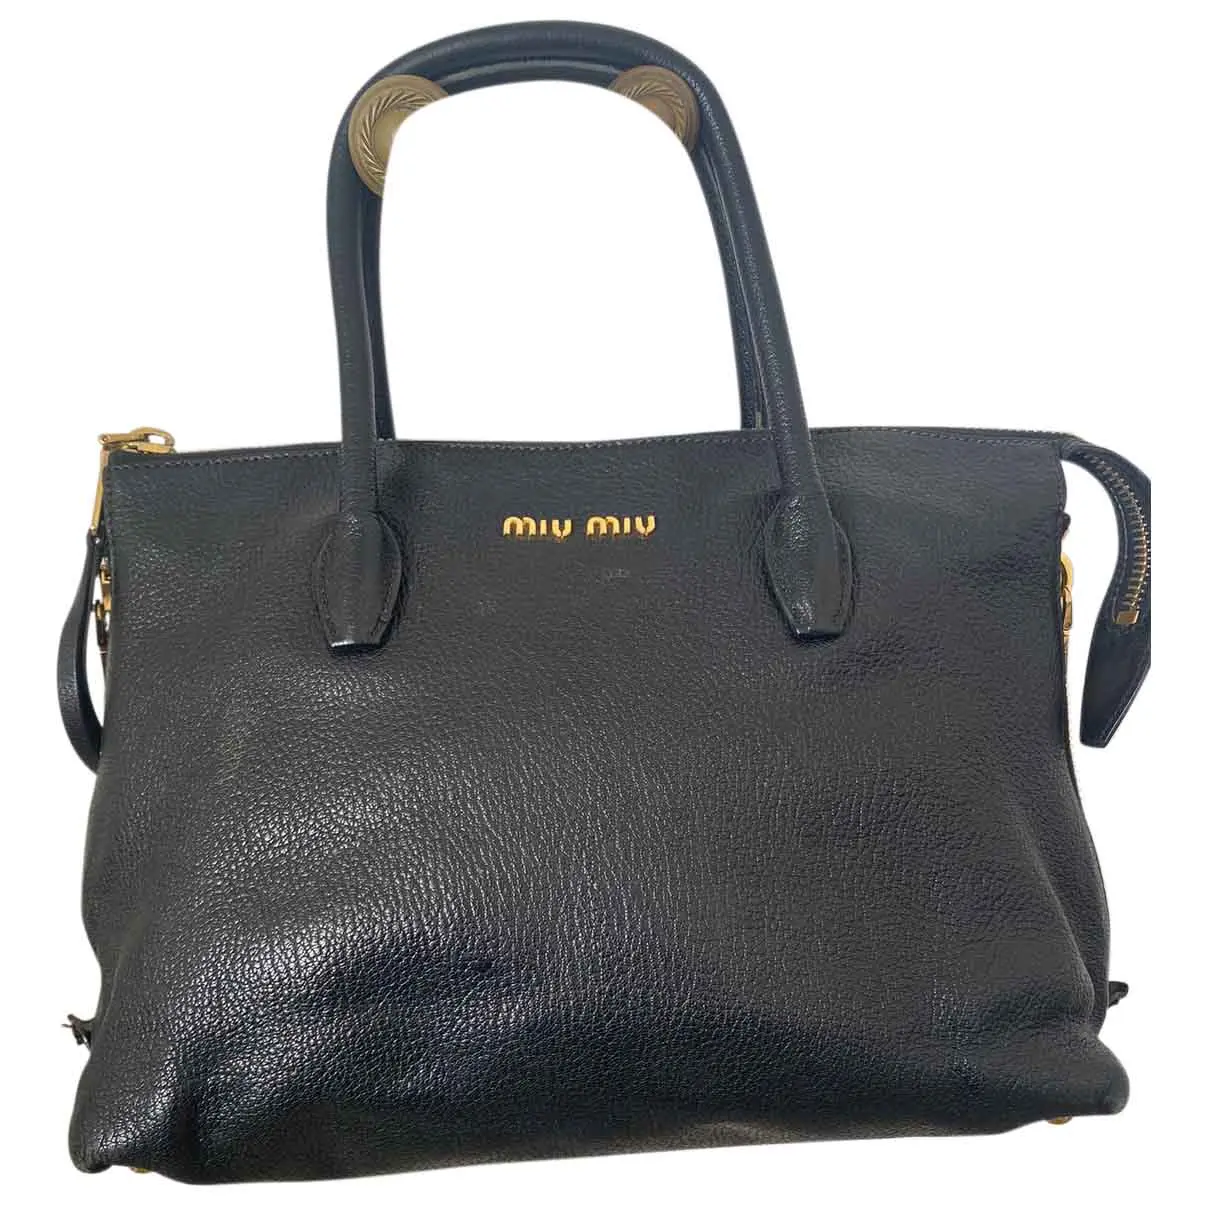 Madras leather handbag